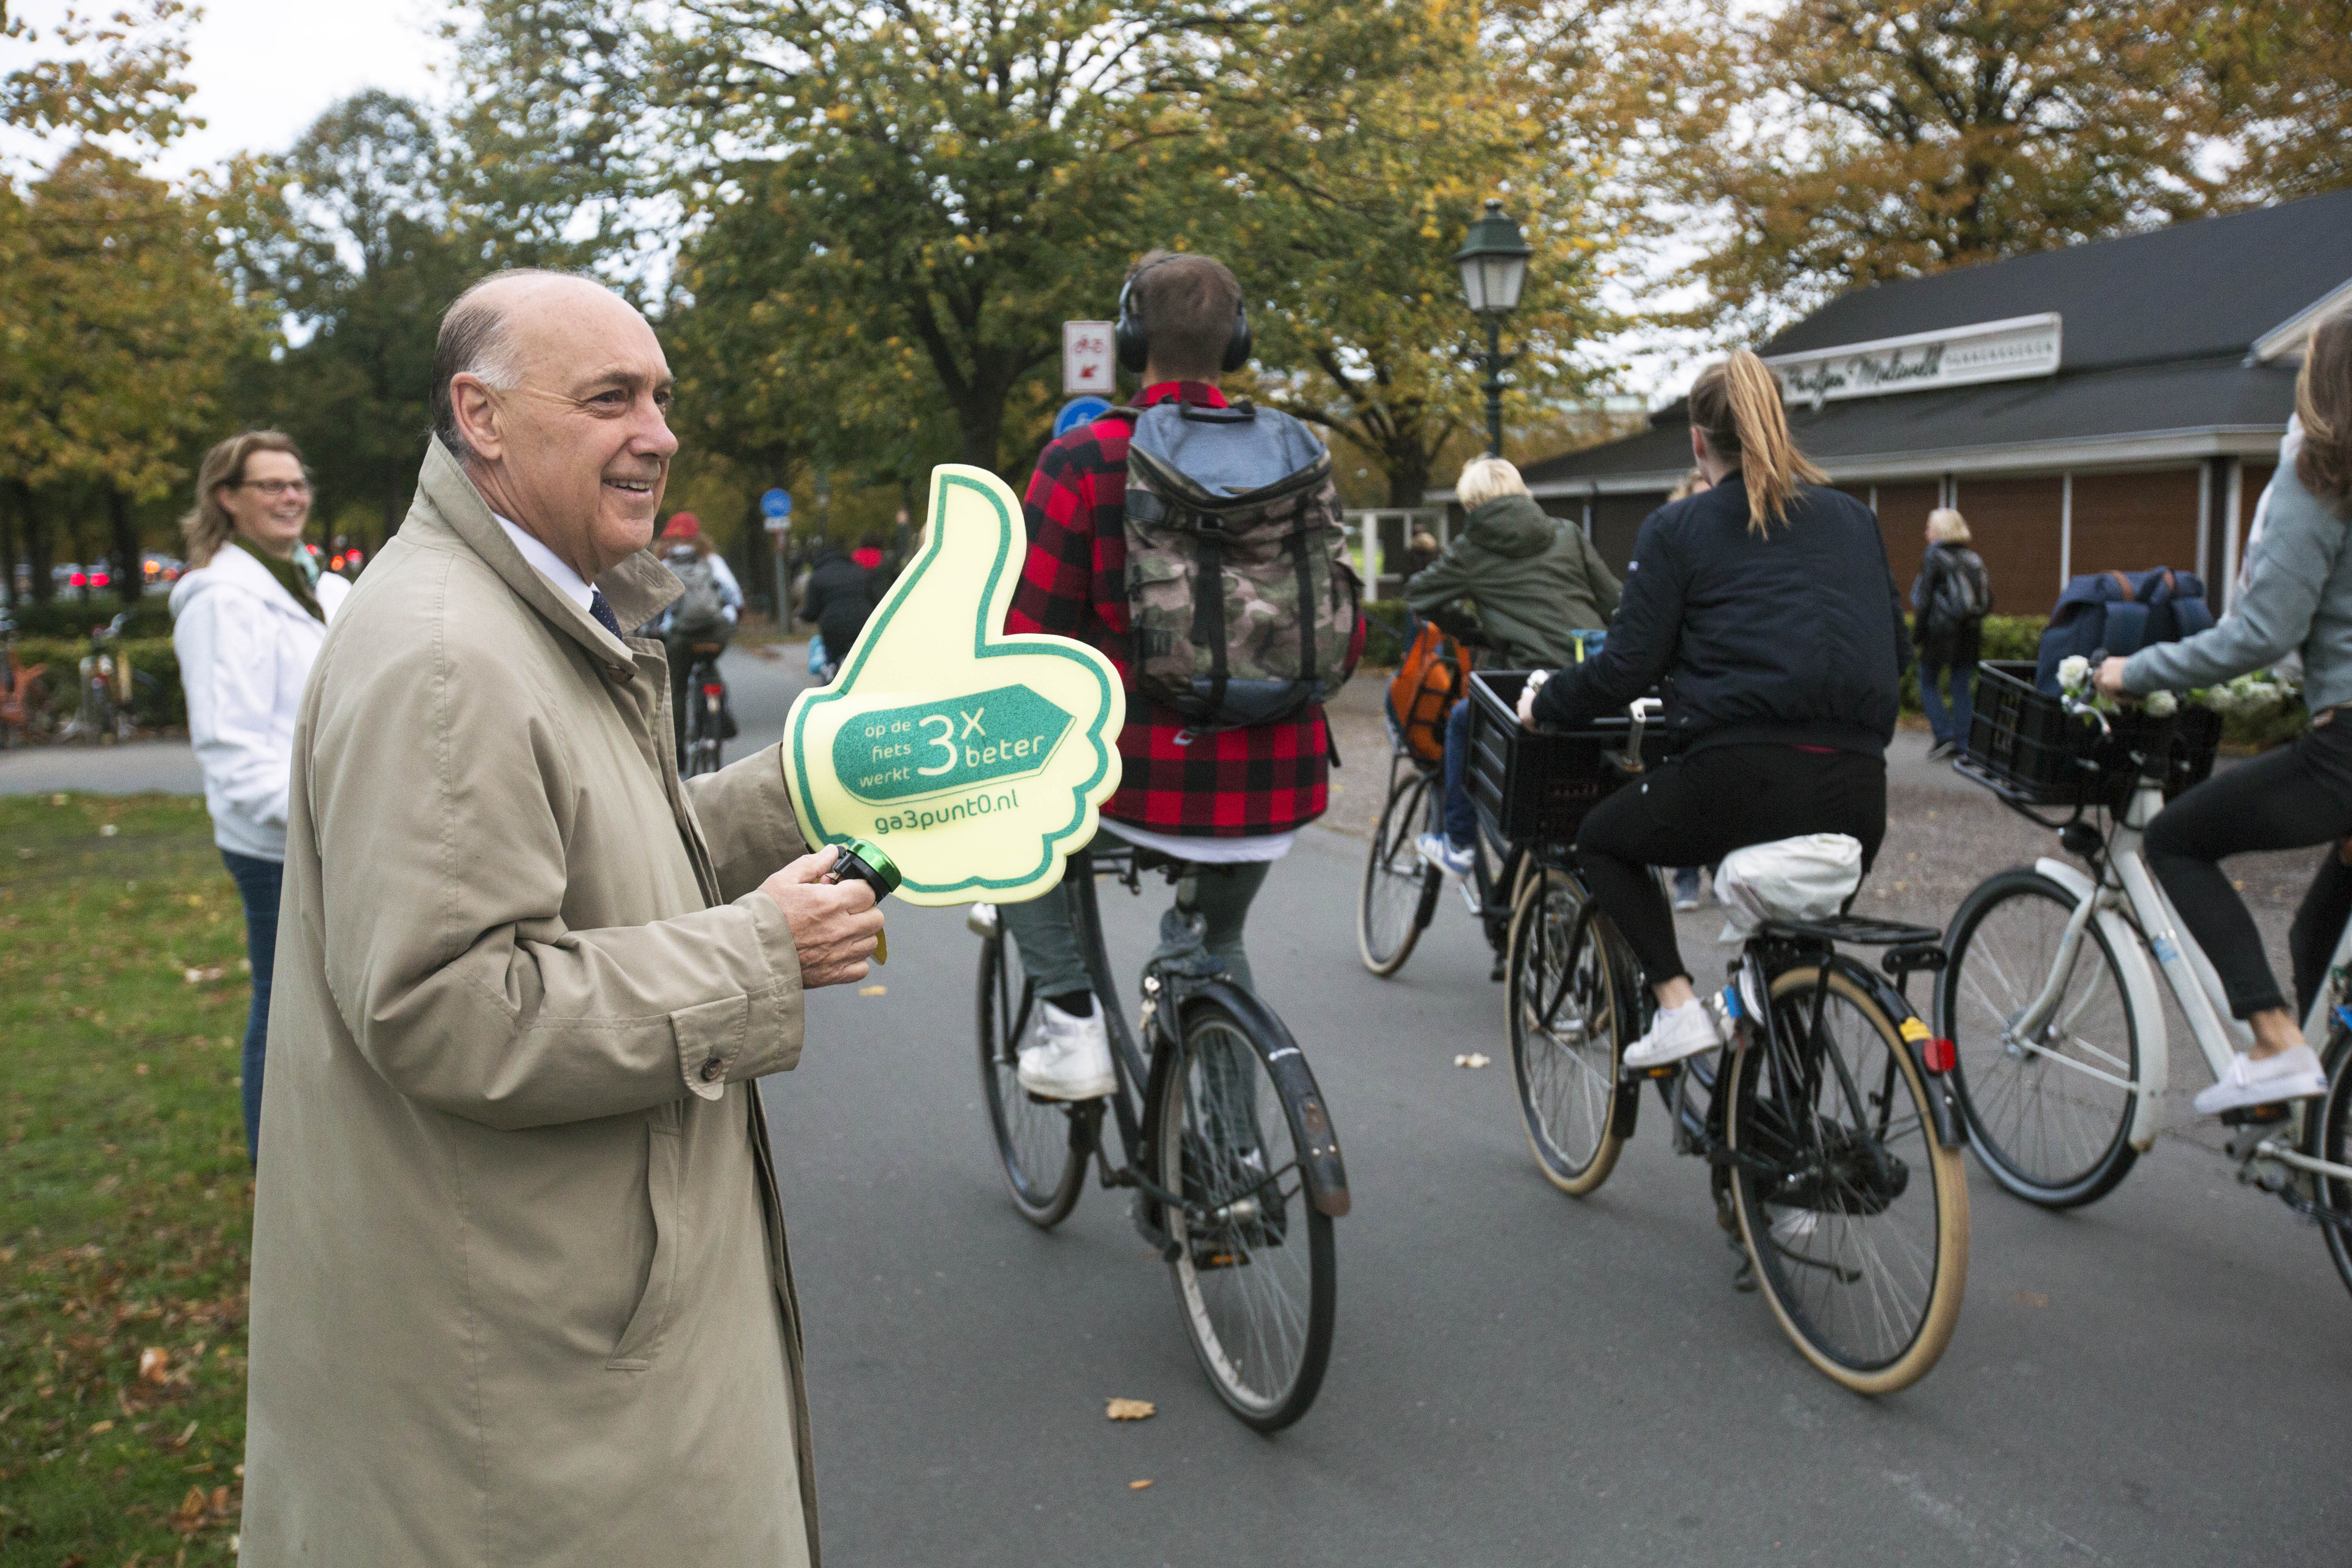 Haags wethouder steekt Duim Omhoog voor fietsers